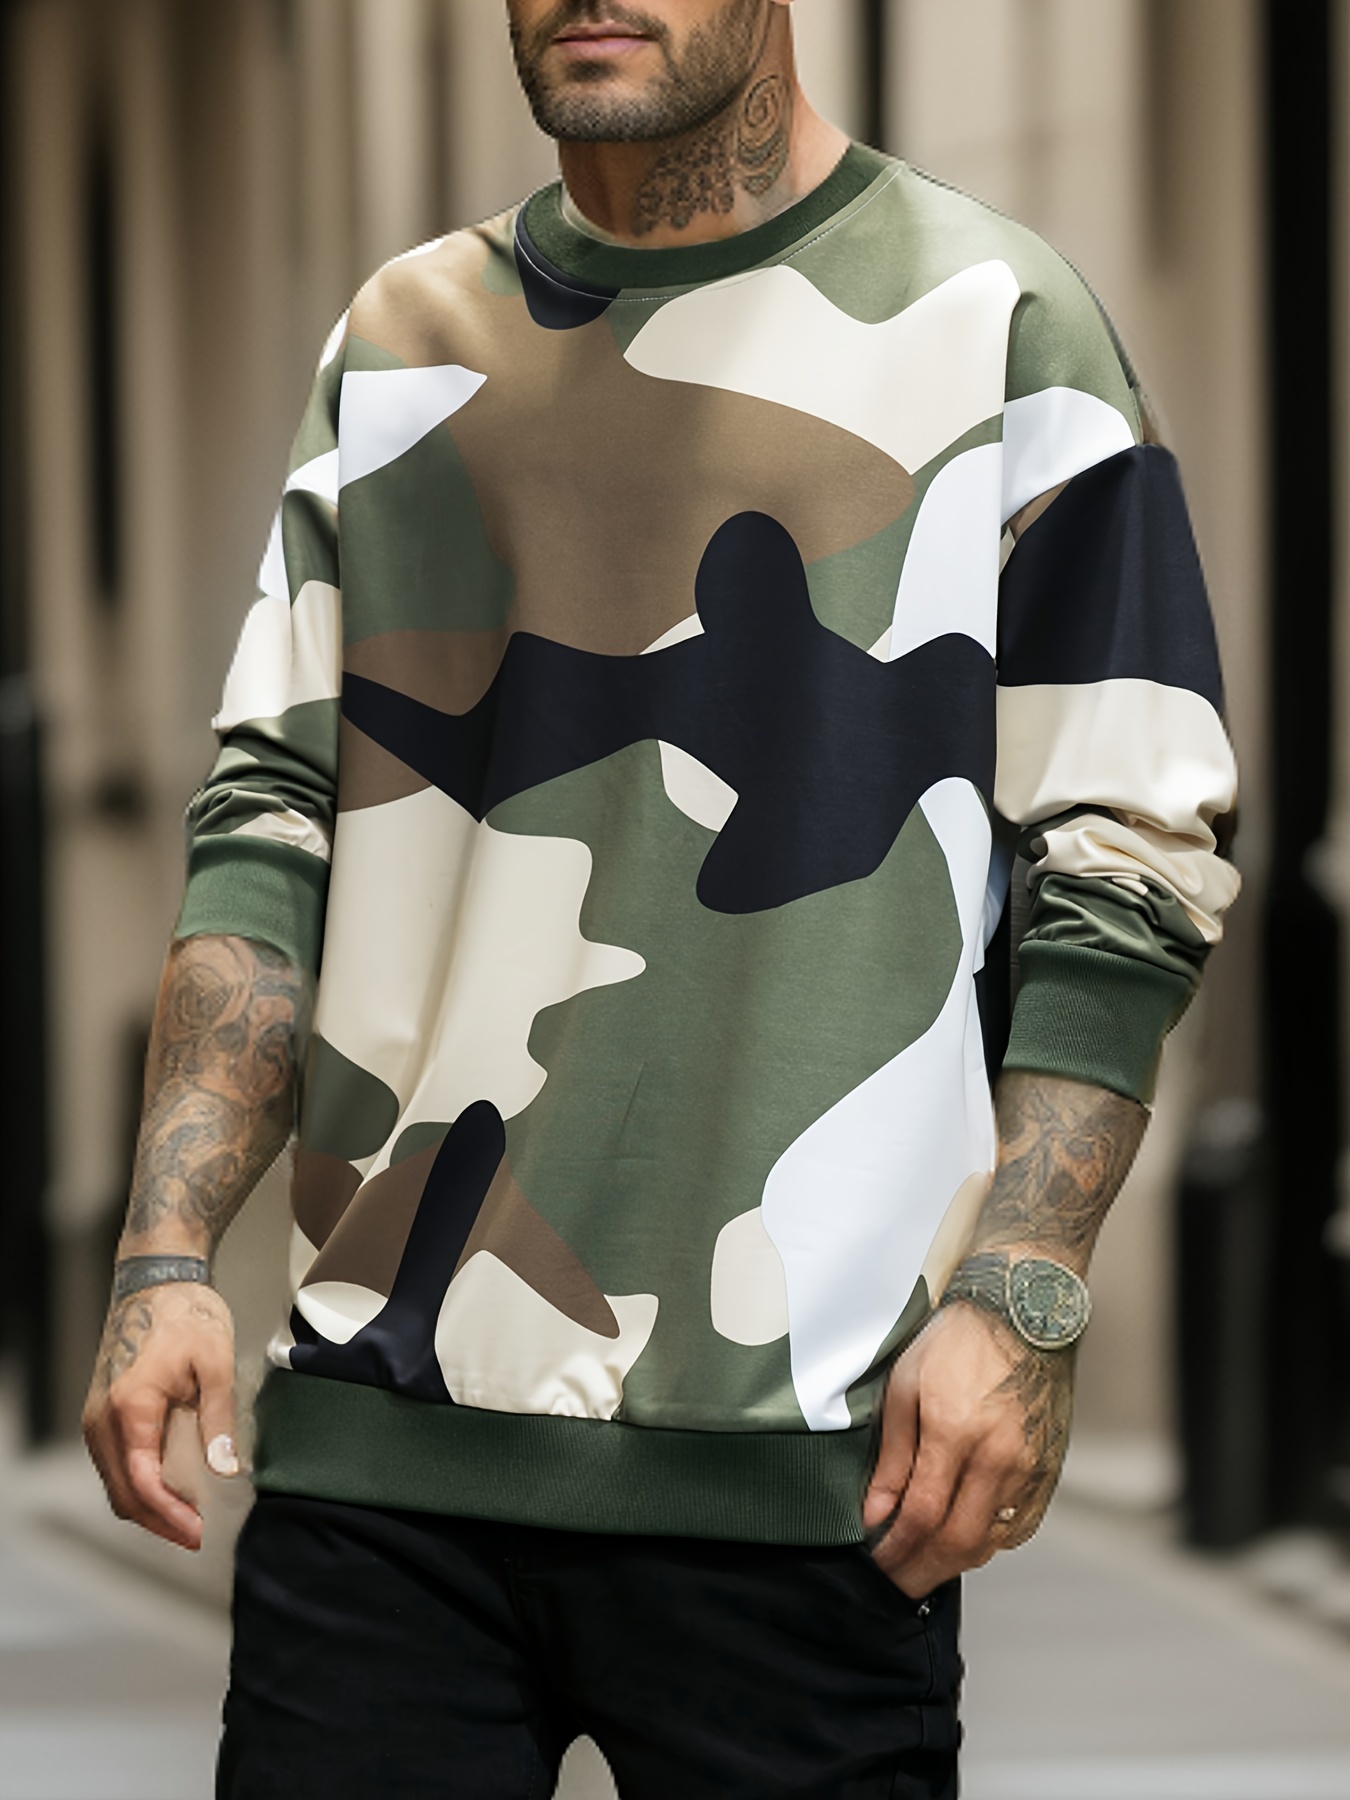 https://img.kwcdn.com/product/camouflage-pattern-sweatshirt/d69d2f15w98k18-86fe7ba6/fancy/000efcf7-ec87-40e3-92d5-7c95d09ea291.jpg